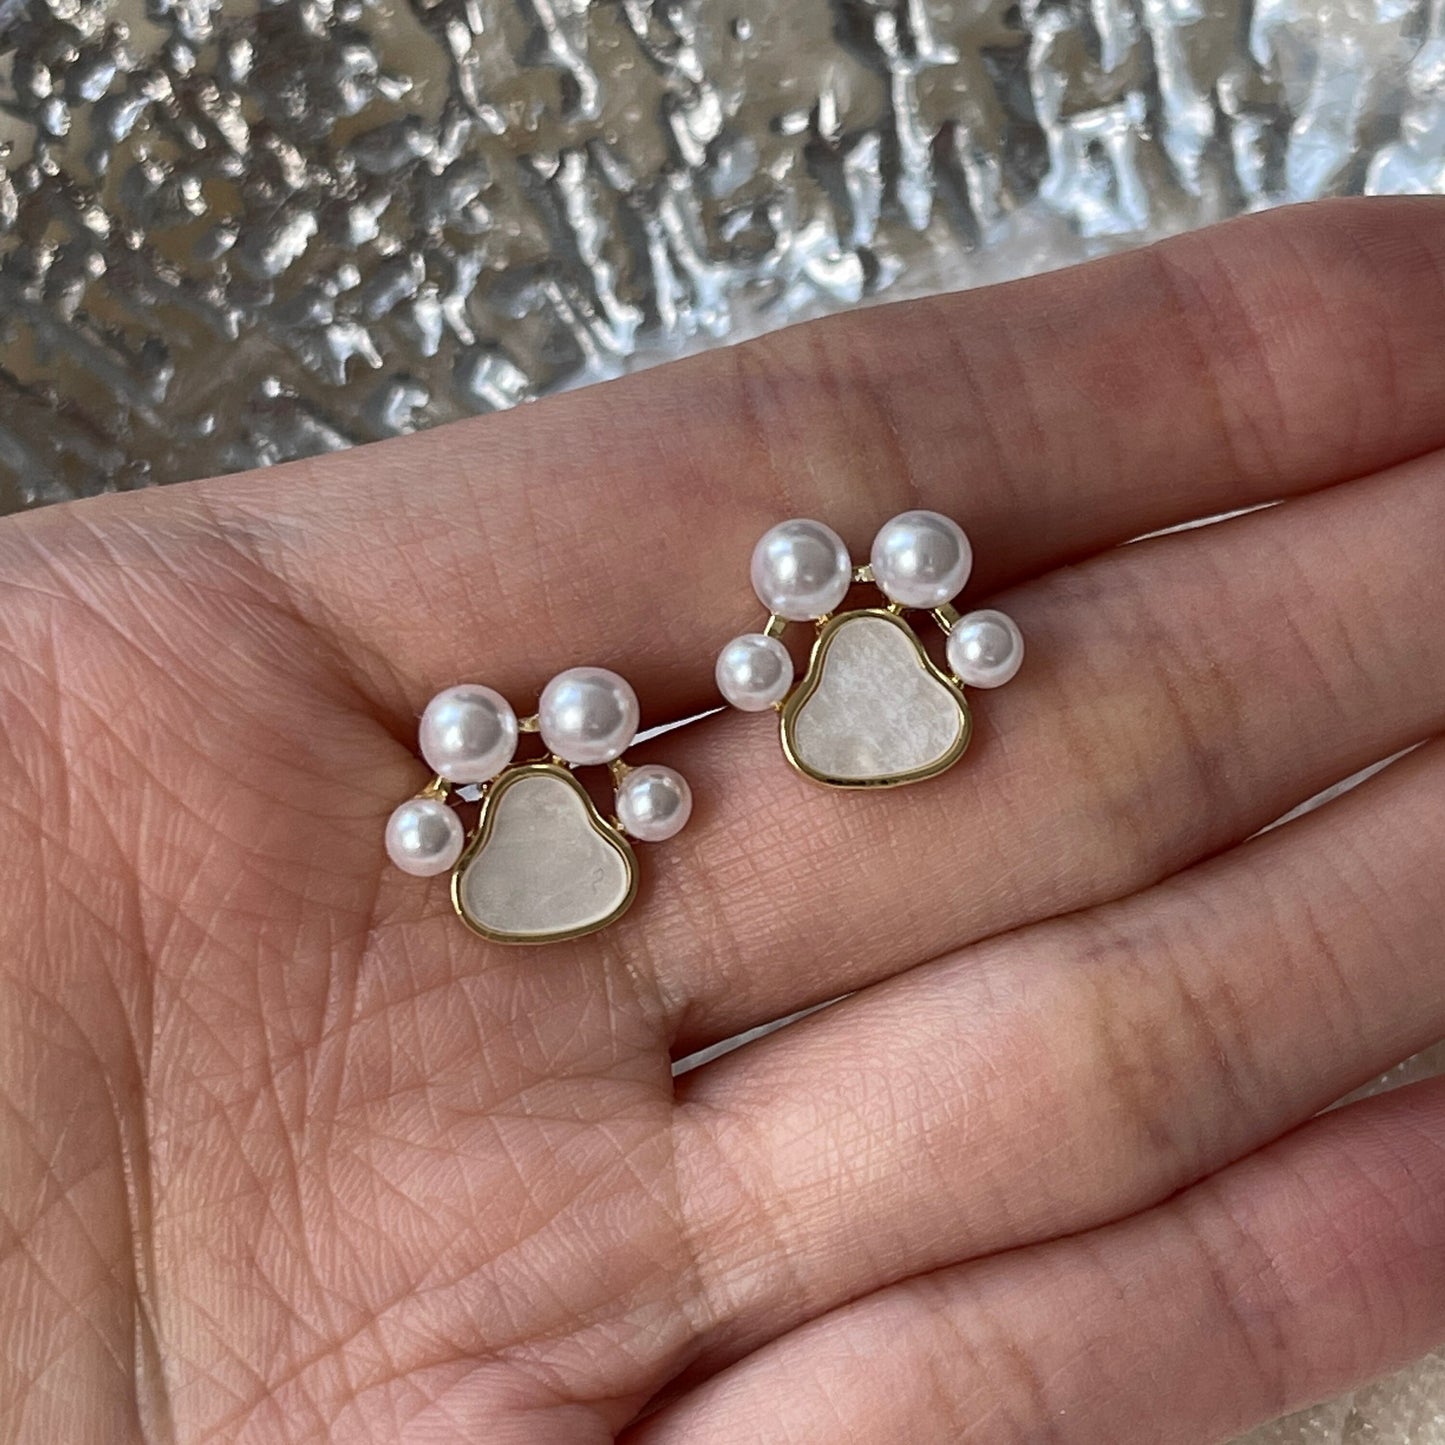 Pearl paw print earrings, puppy paw studs, pearl paw earrings, shell earrings, dog cat paw earrings, pet jewelry, y2k cute animal earrings